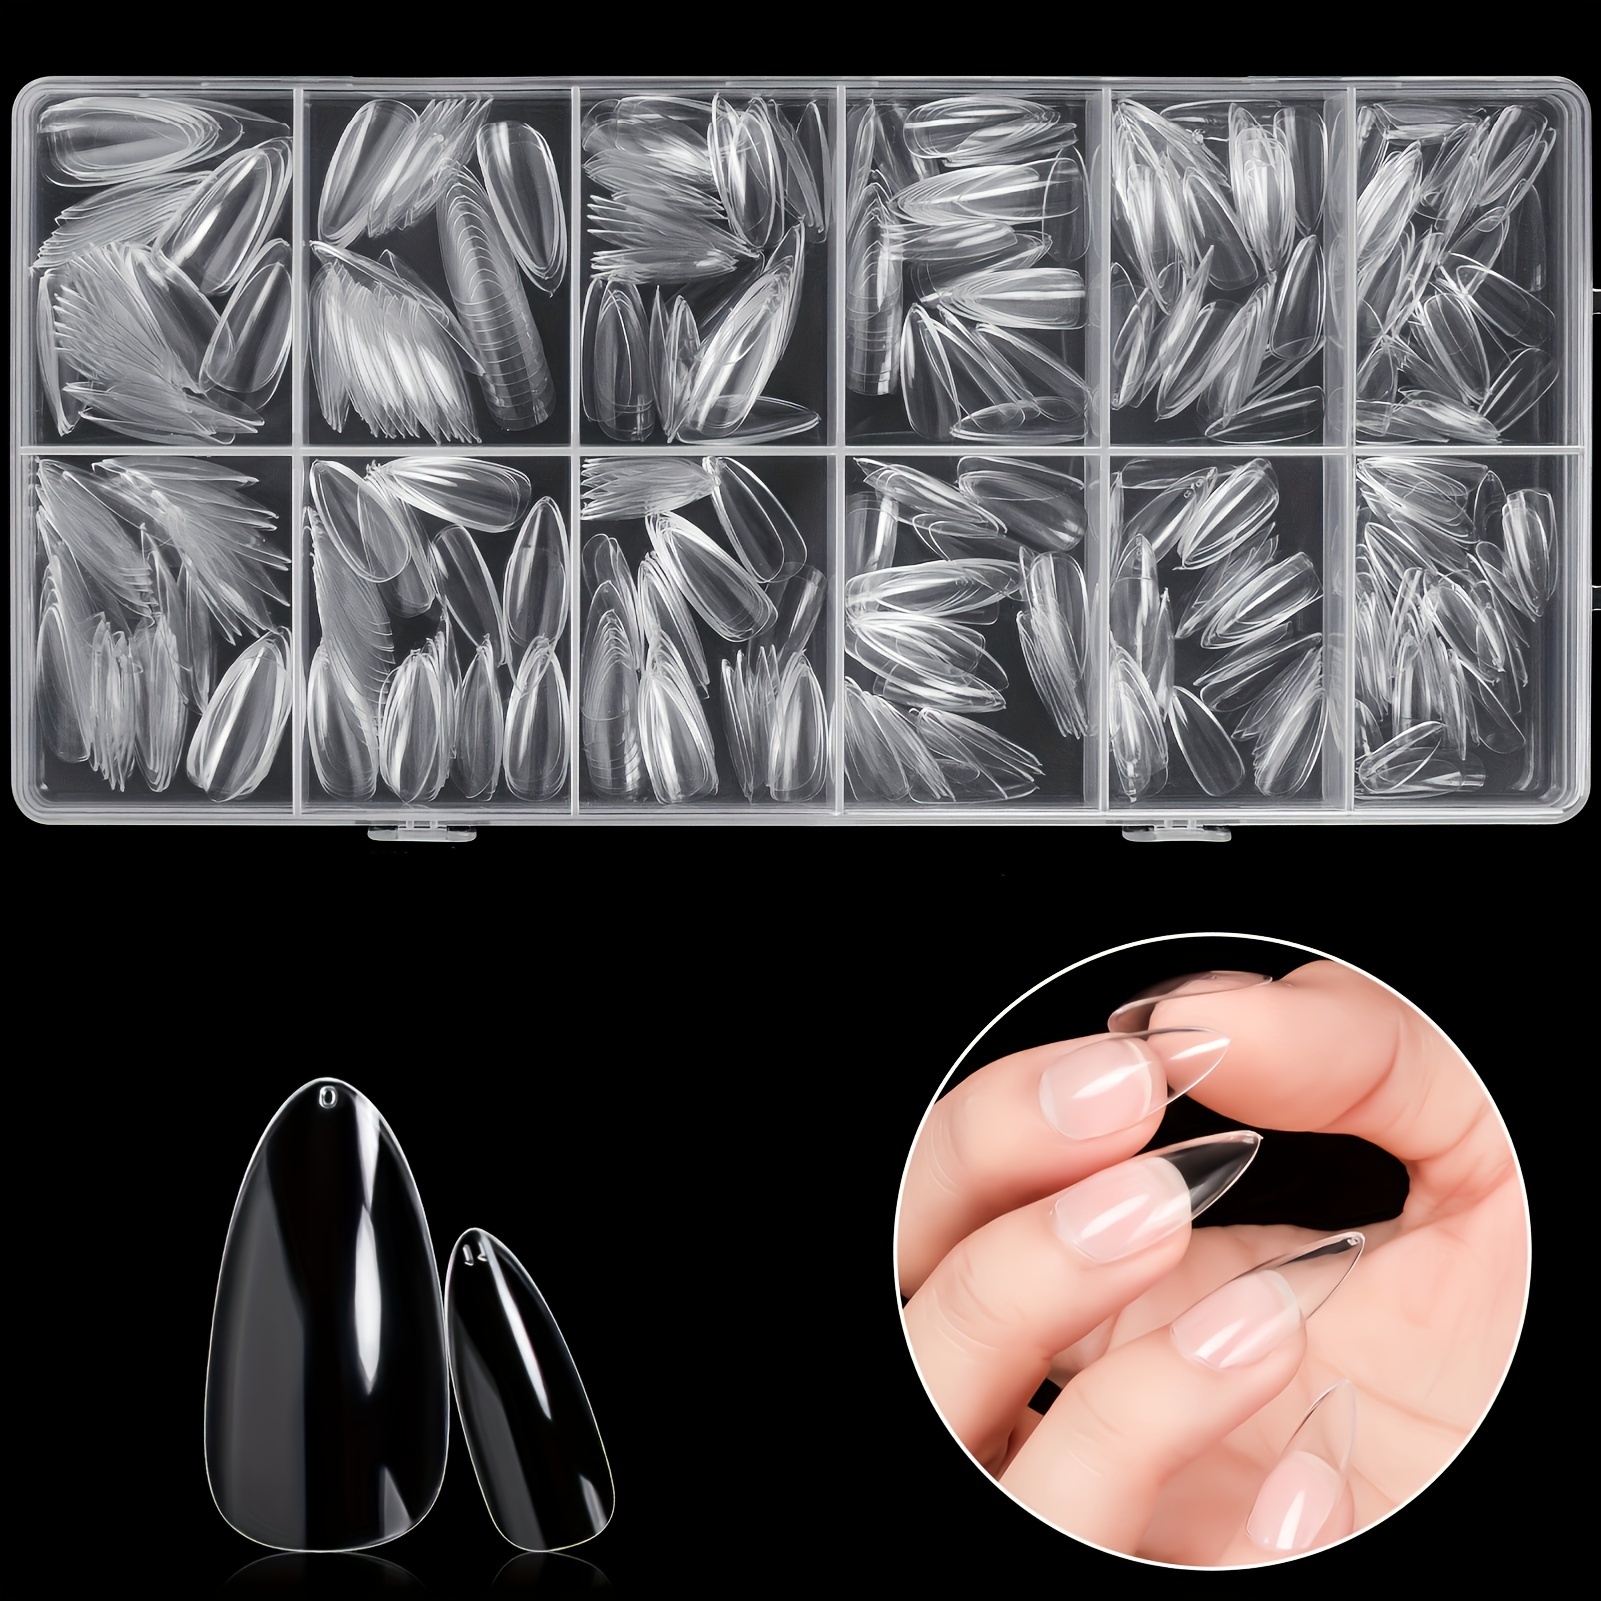 

600pcs Gel X Nail Kit Medium Almond Oval Nail Tips Clear False Nail Tips Clear Press On Nails Full Cover Design Almond Shaped False Nails